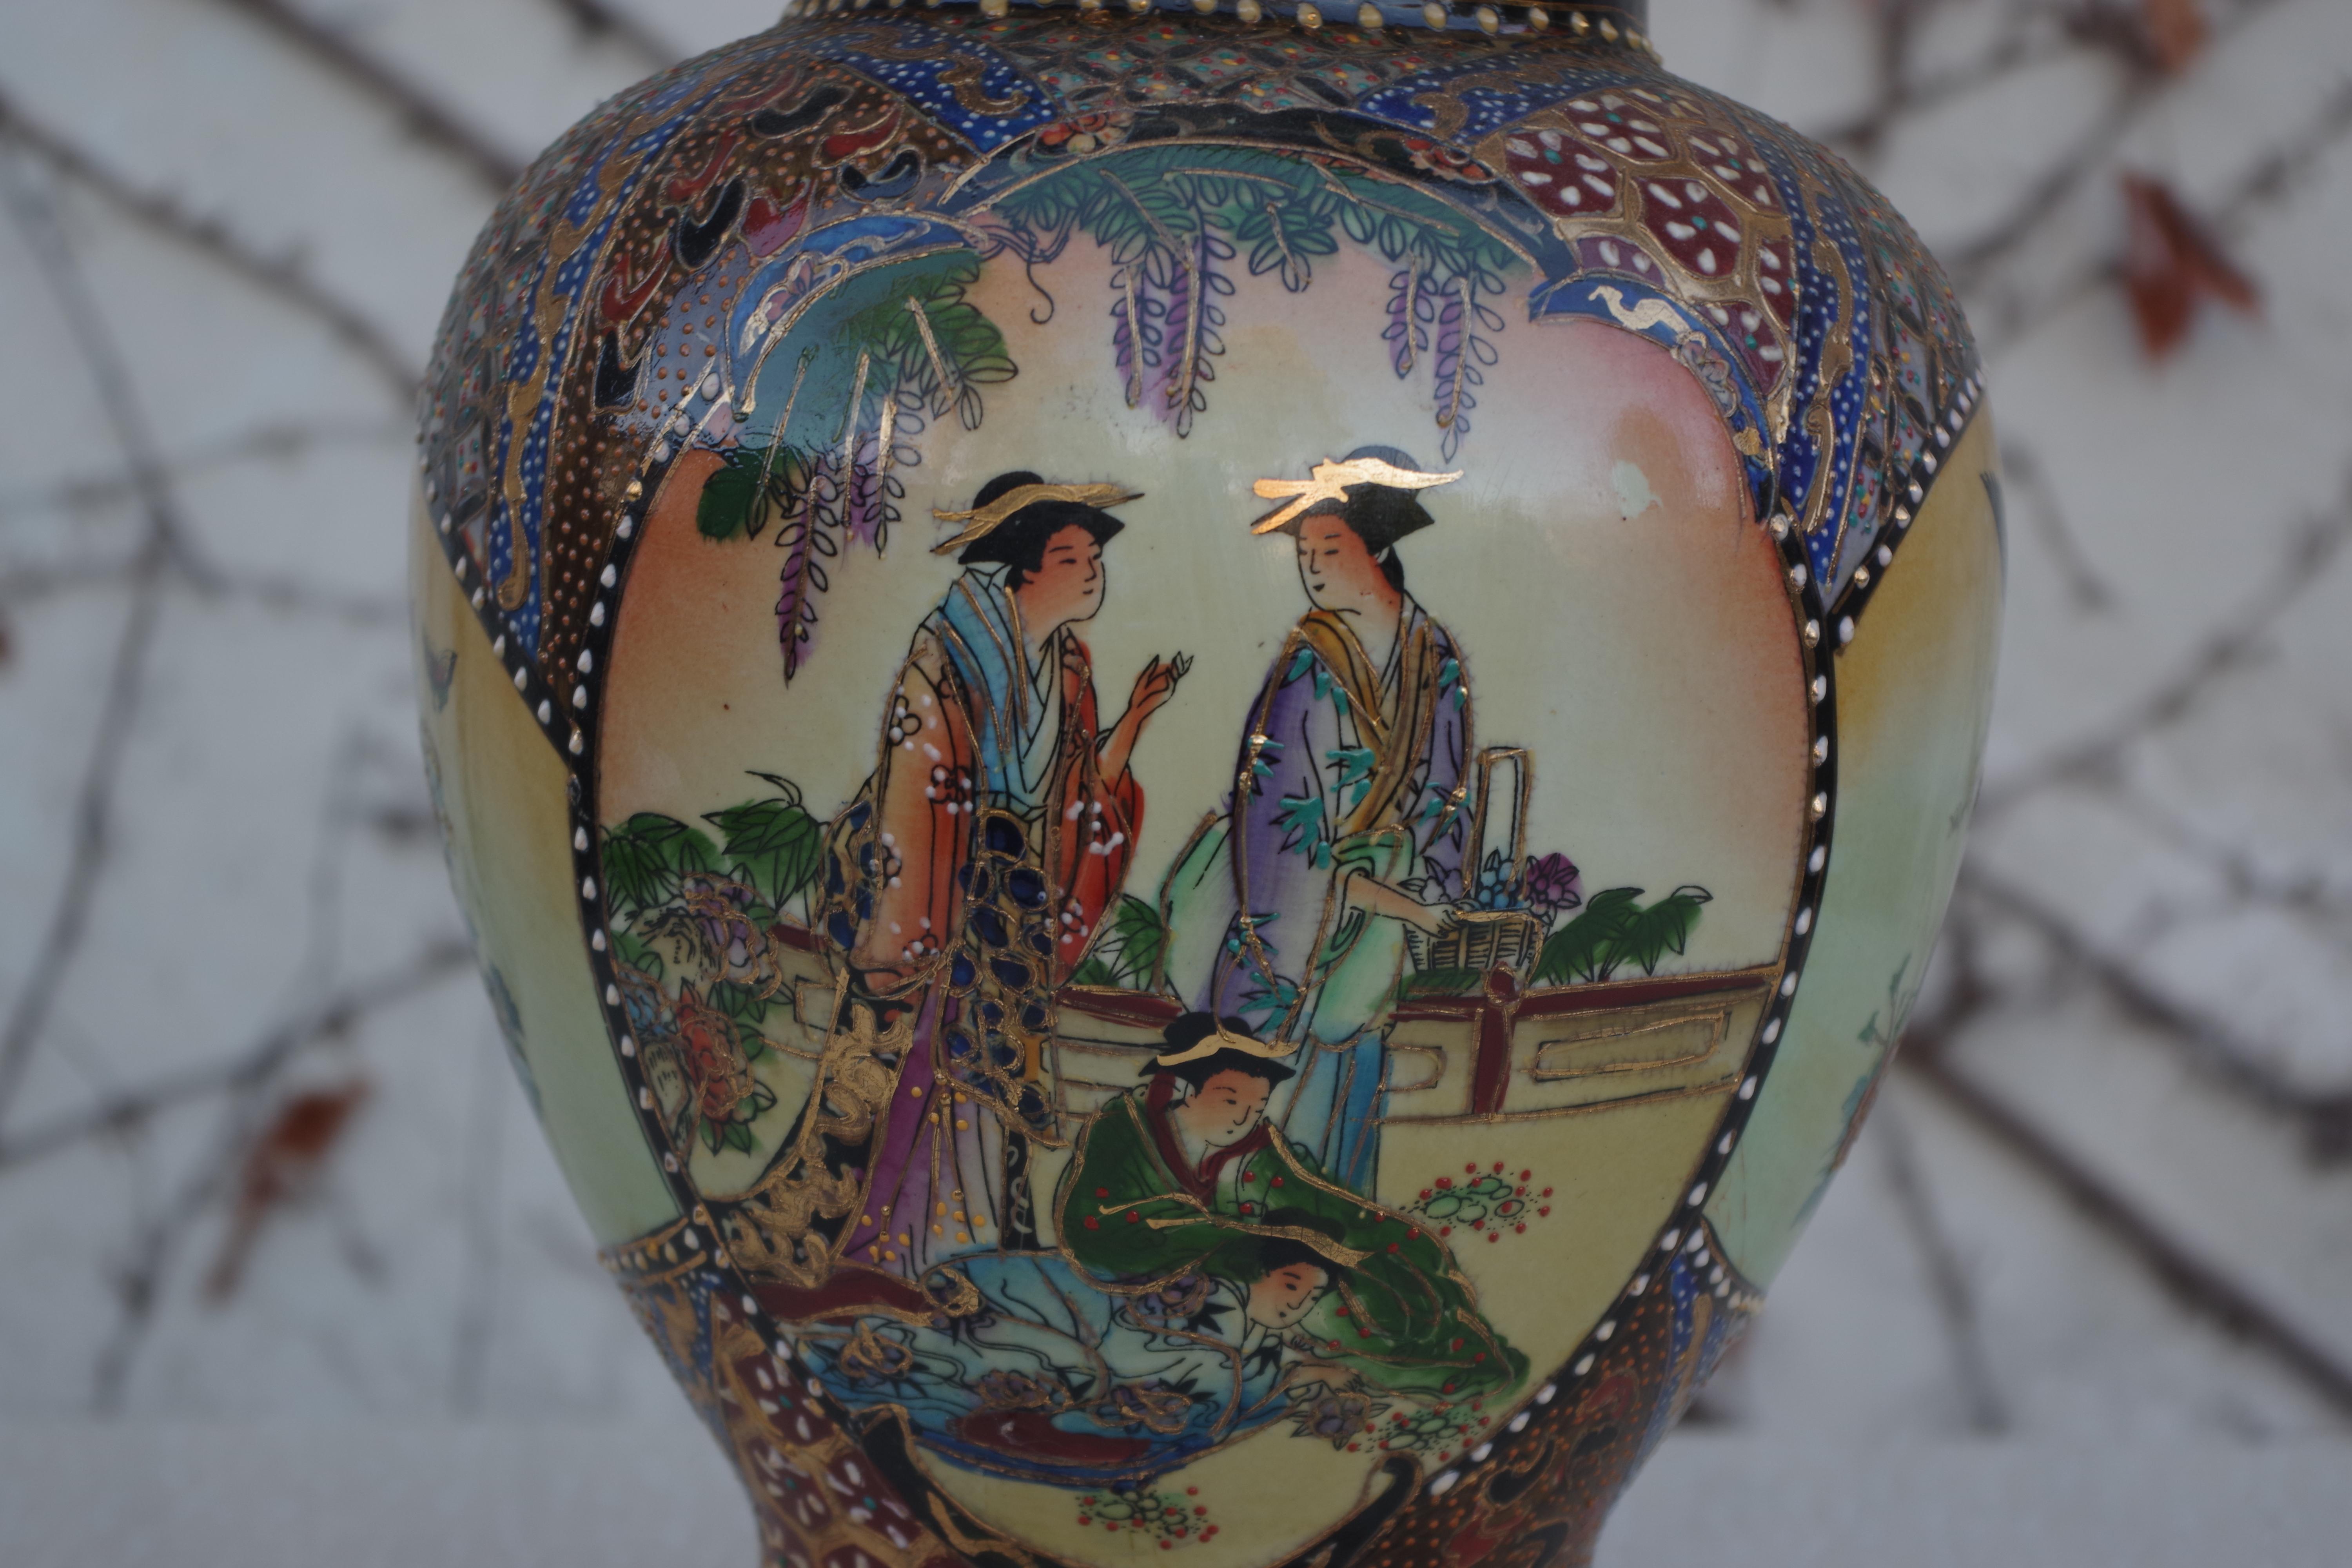 Vaso cinese in ceramica anni 1960 dipinti a mano.
     